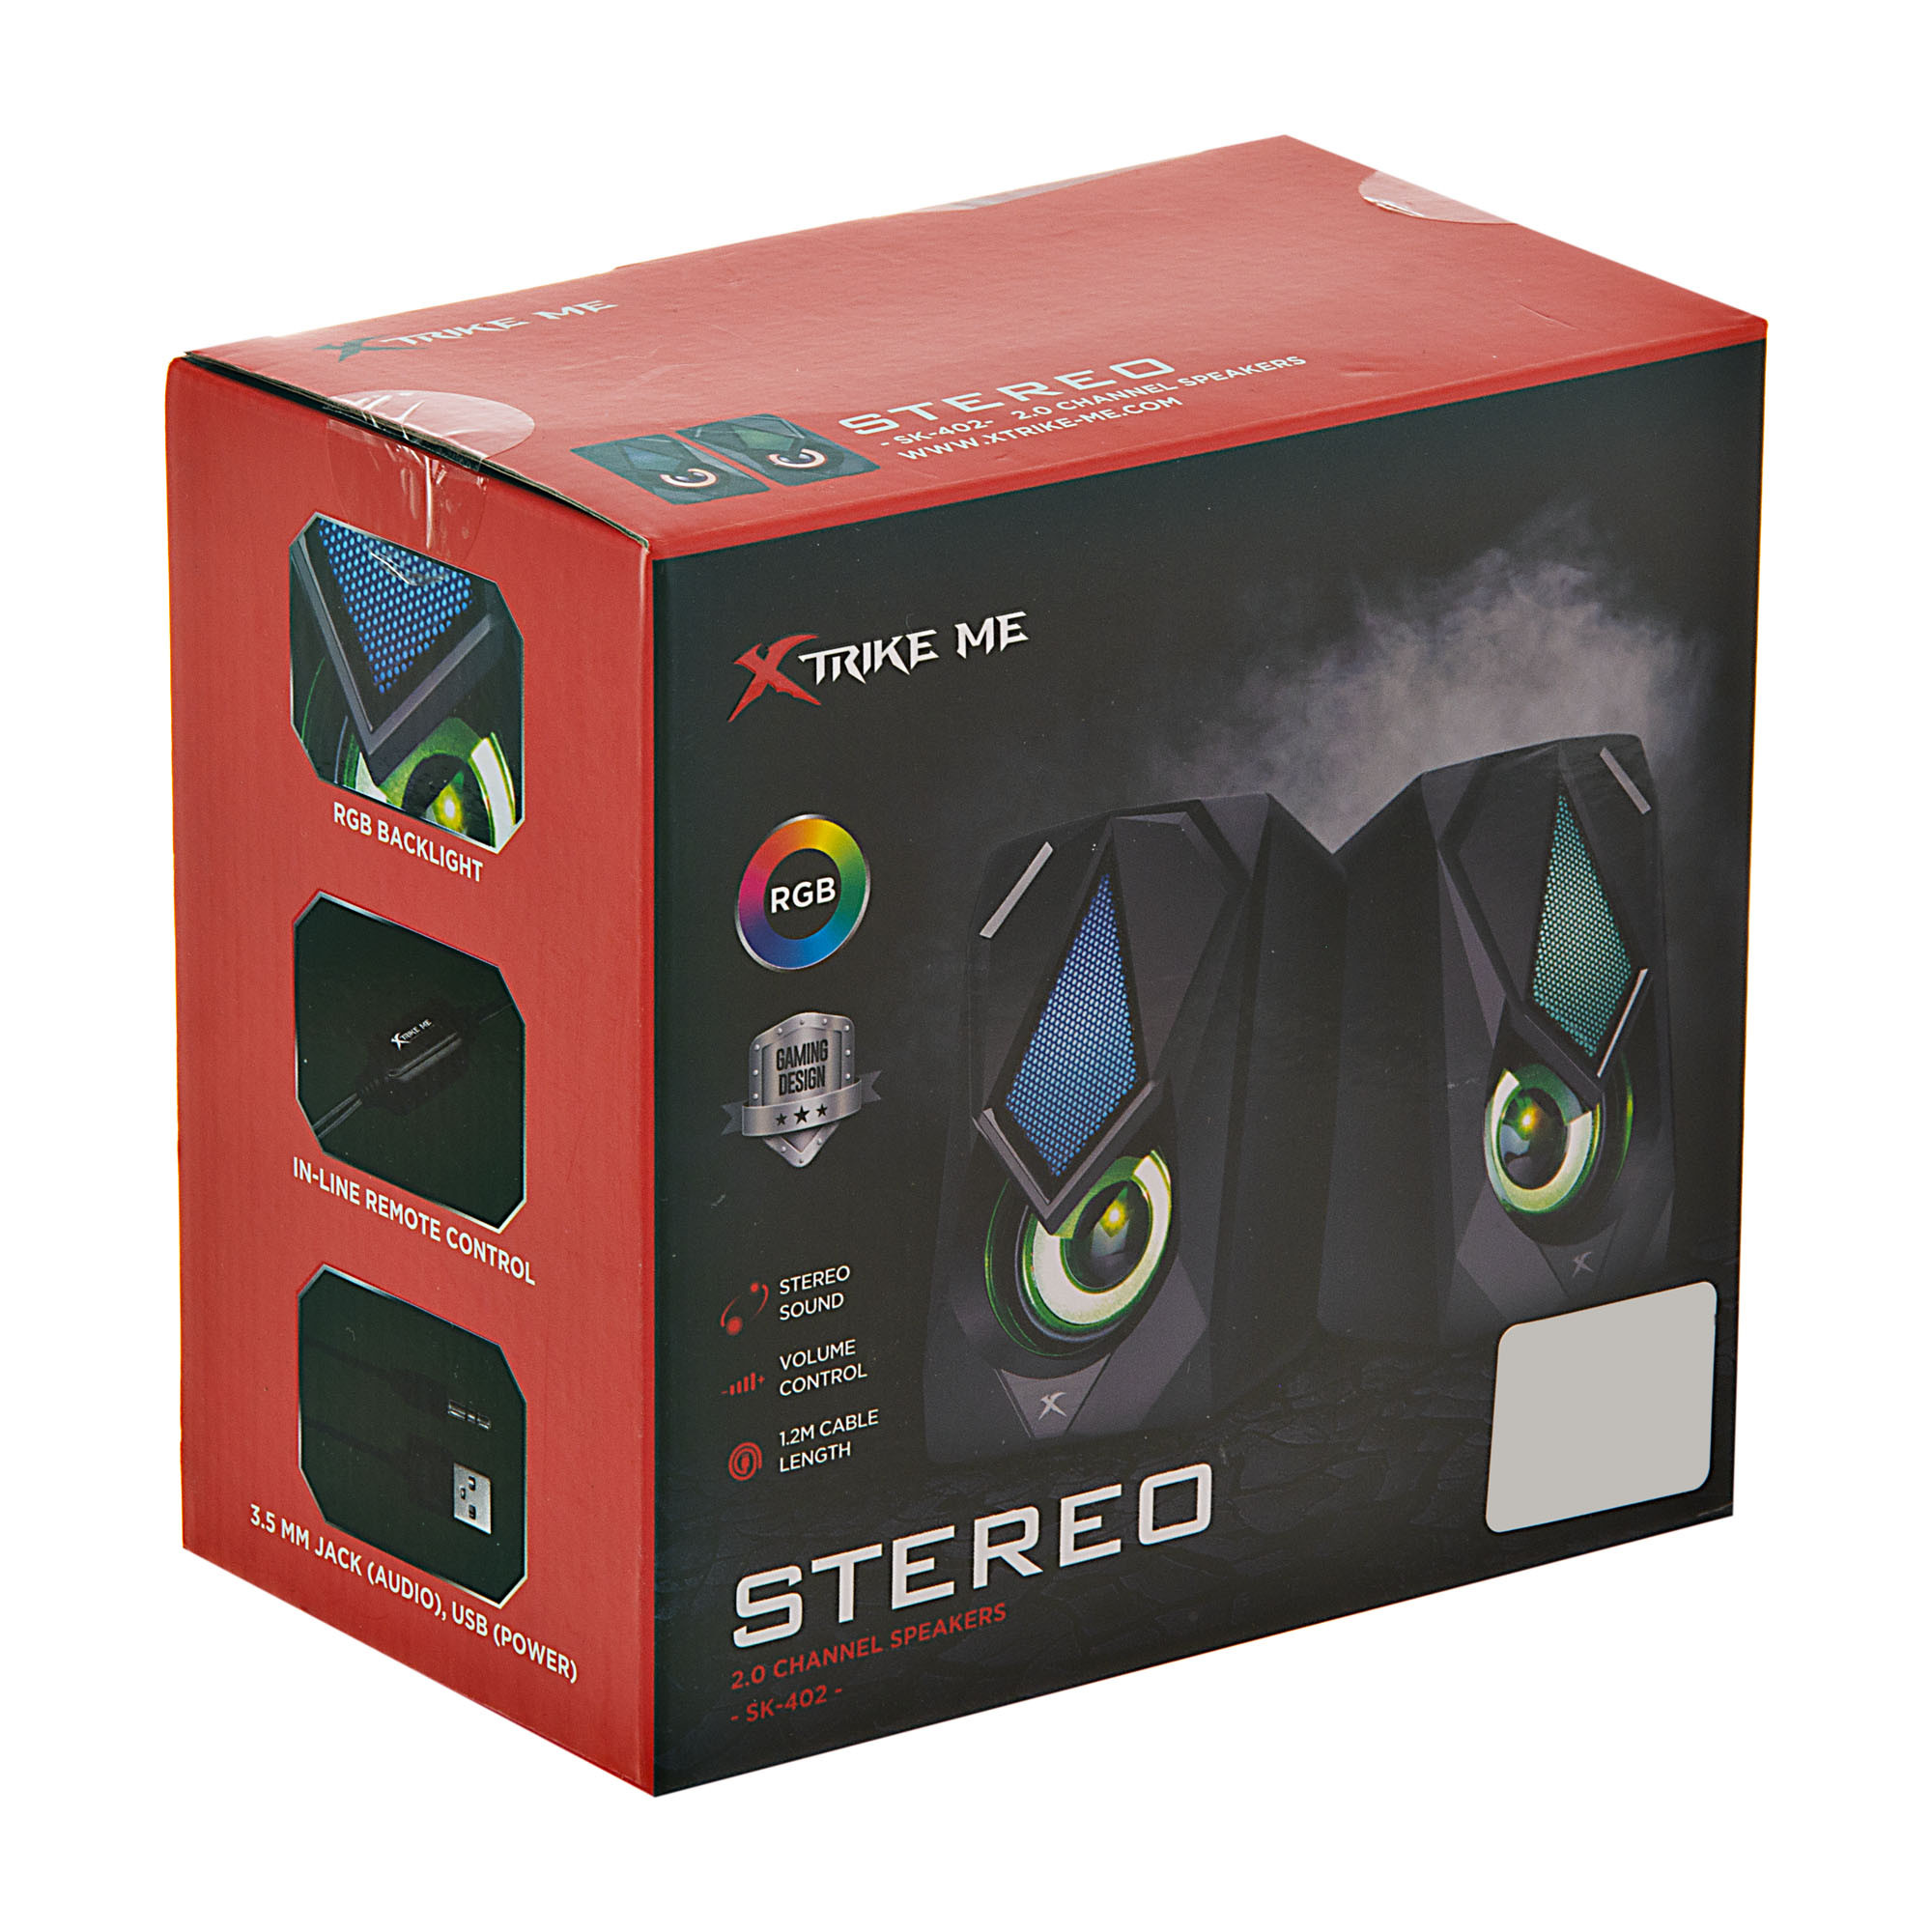 Xtrike me Altavoces Gaming SK402 RGB Negro